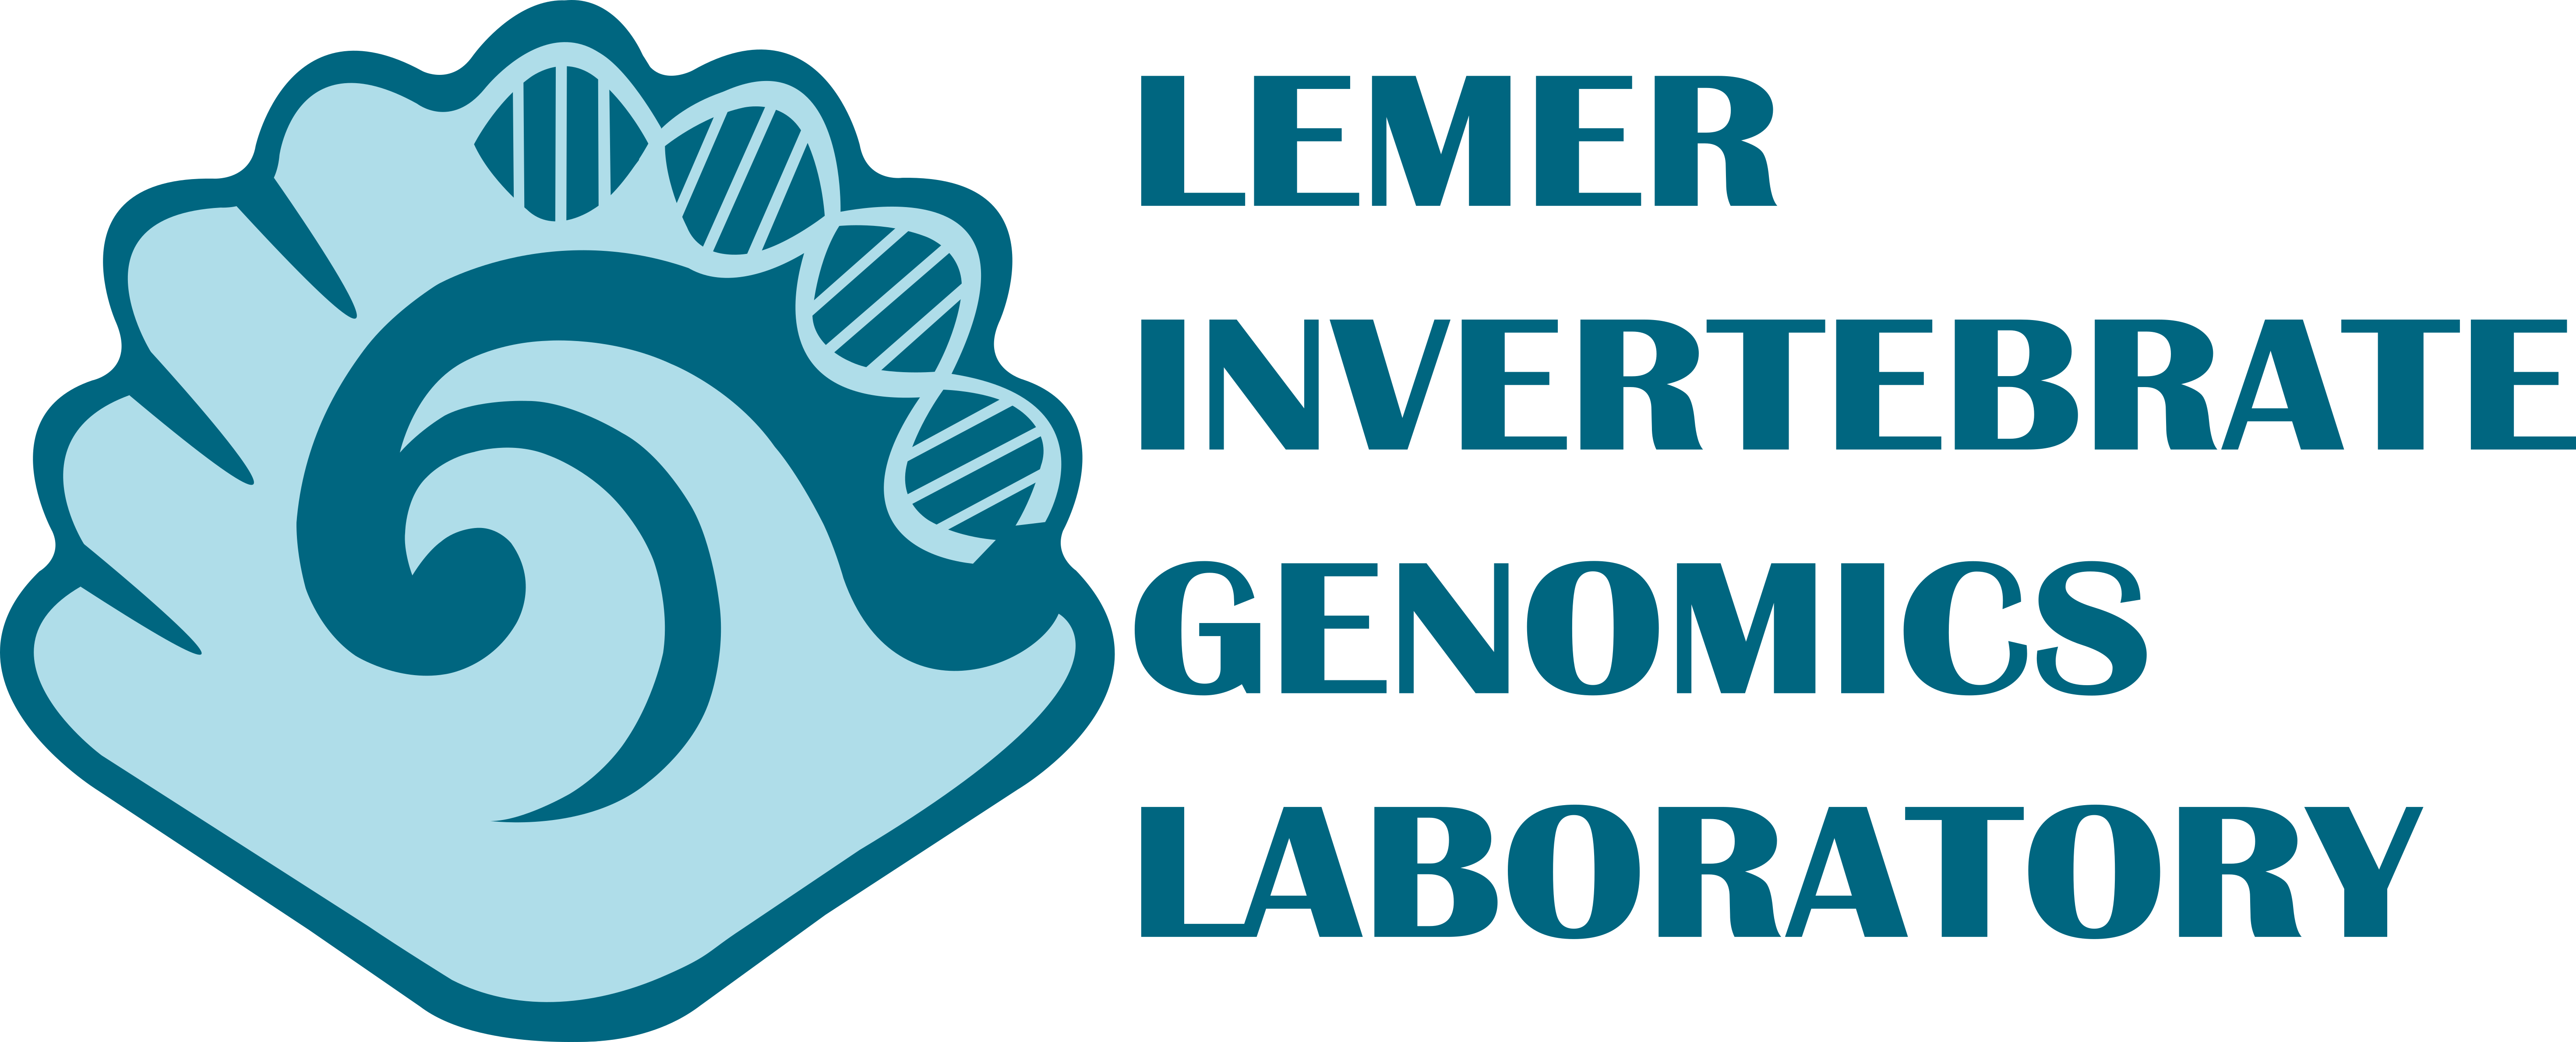 Lemer Invertebrate Genomics Laboratory